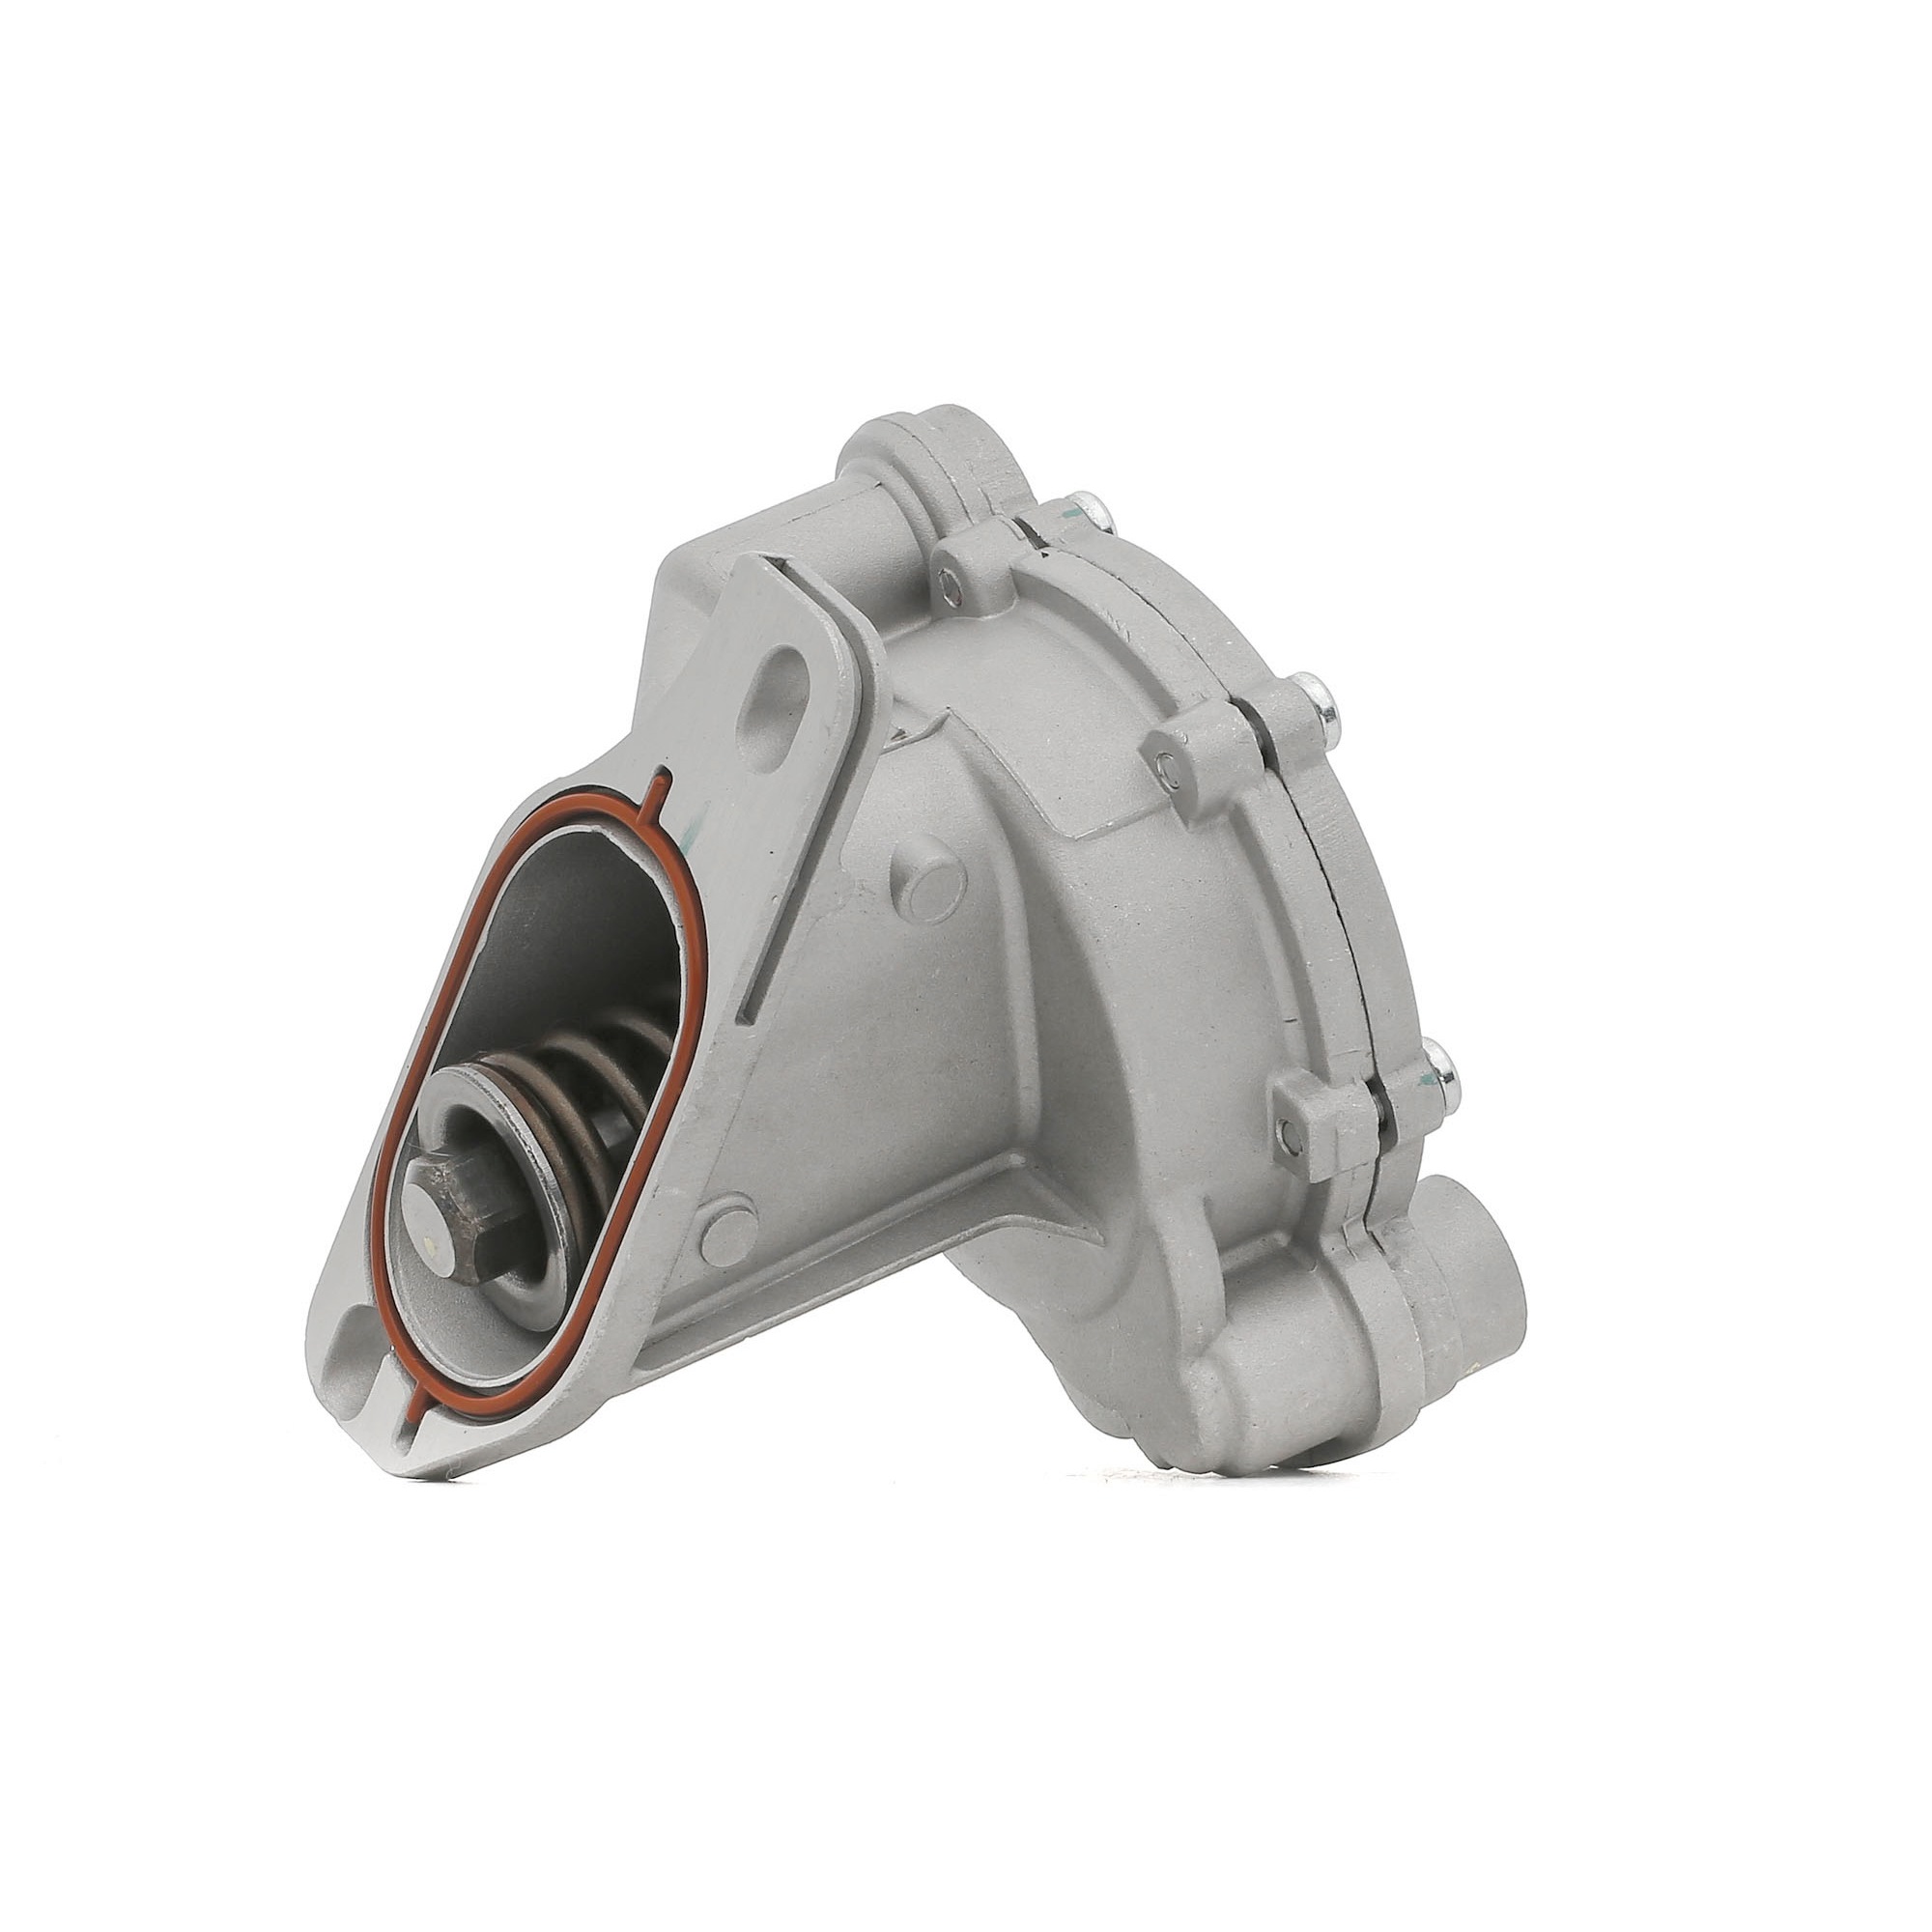 STARK SKVP-1350020 Brake vacuum pump with seal, with seal ring